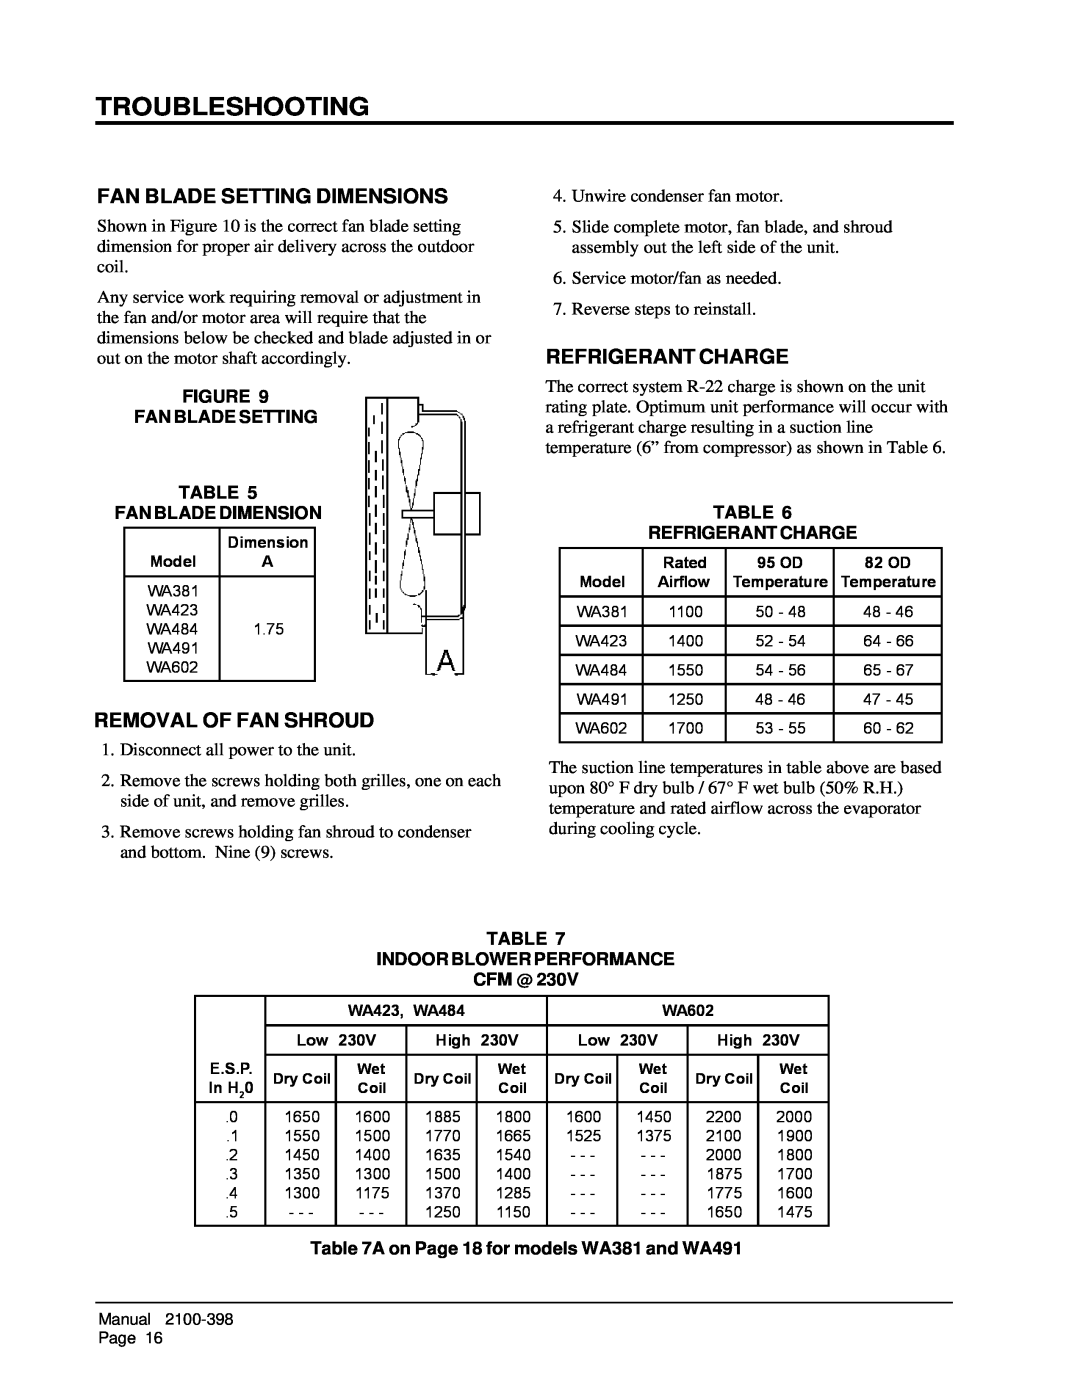 Bard WA381 Troubleshooting, Fan Blade Setting Dimensions, Removal Of Fan Shroud, Refrigerant Charge, Fan Blade Dimension 